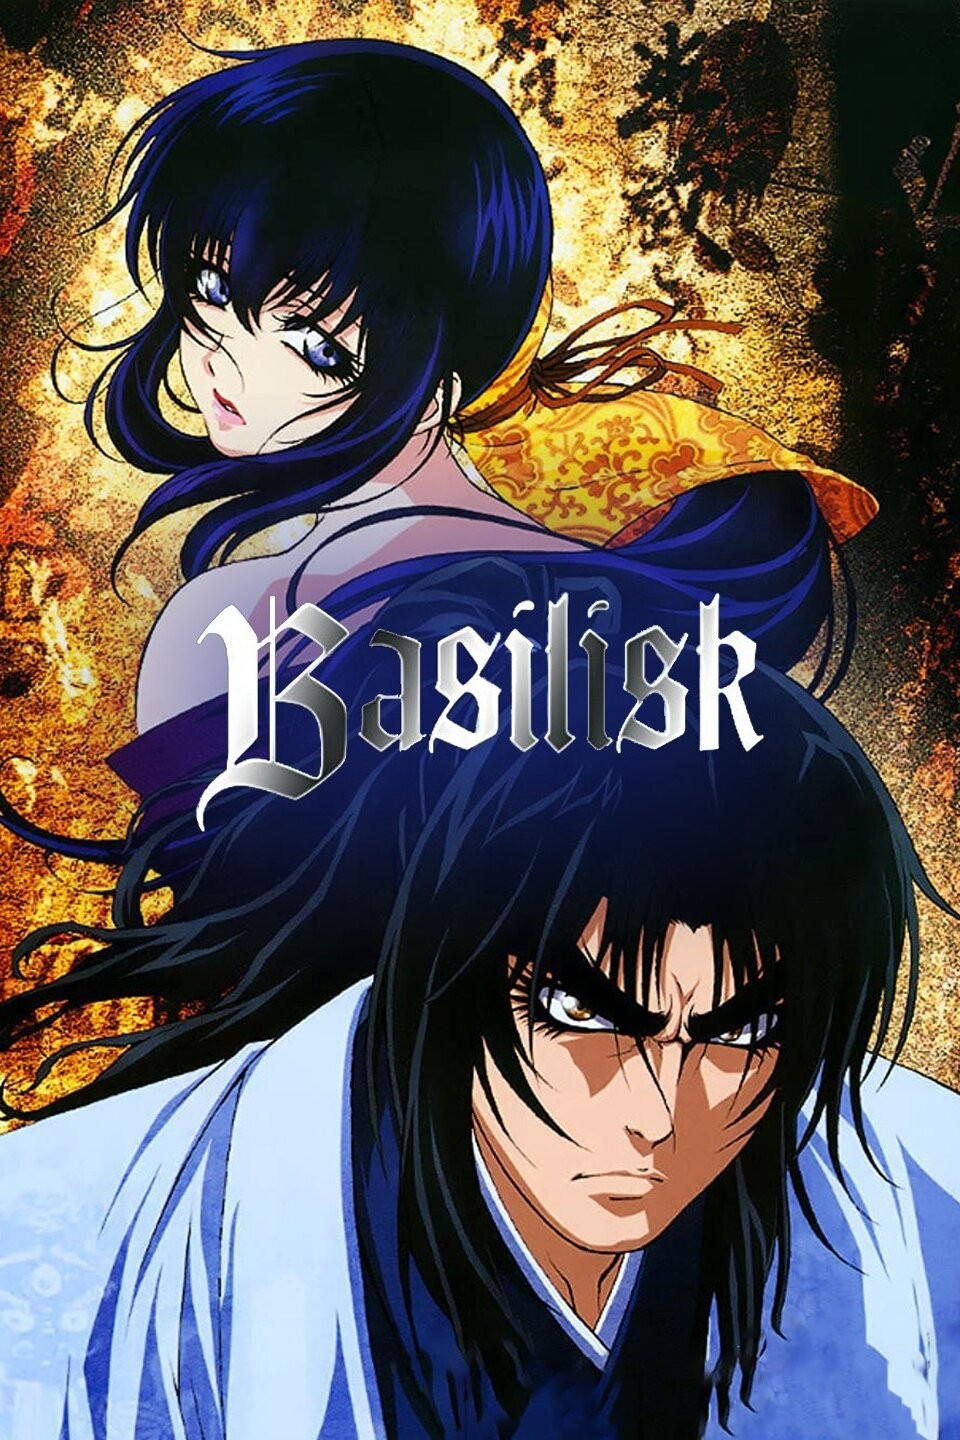 Basilisk The Ouka Ninja Scrolls  The Winter 2018 Anime Preview Guide   Anime News Network